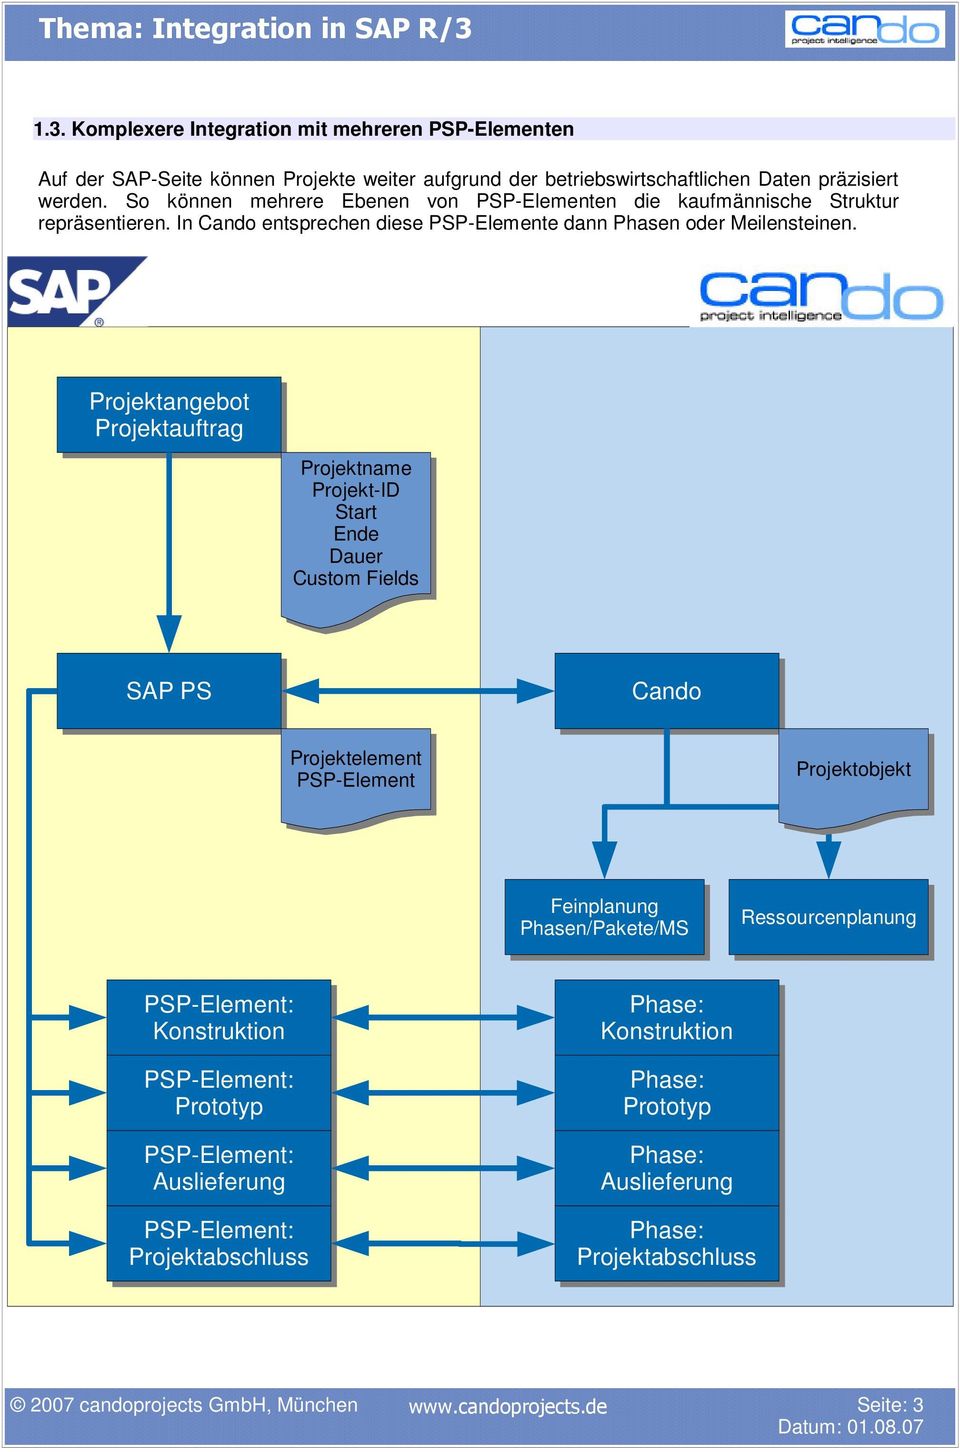 Projektangebot Projektauftrag Projektname Projekt-ID Start Ende Dauer Custom Fields SAP PS Cando Projektelement PSP-Element Projektobjekt Feinplanung Phasen/Pakete/MS Ressourcenplanung